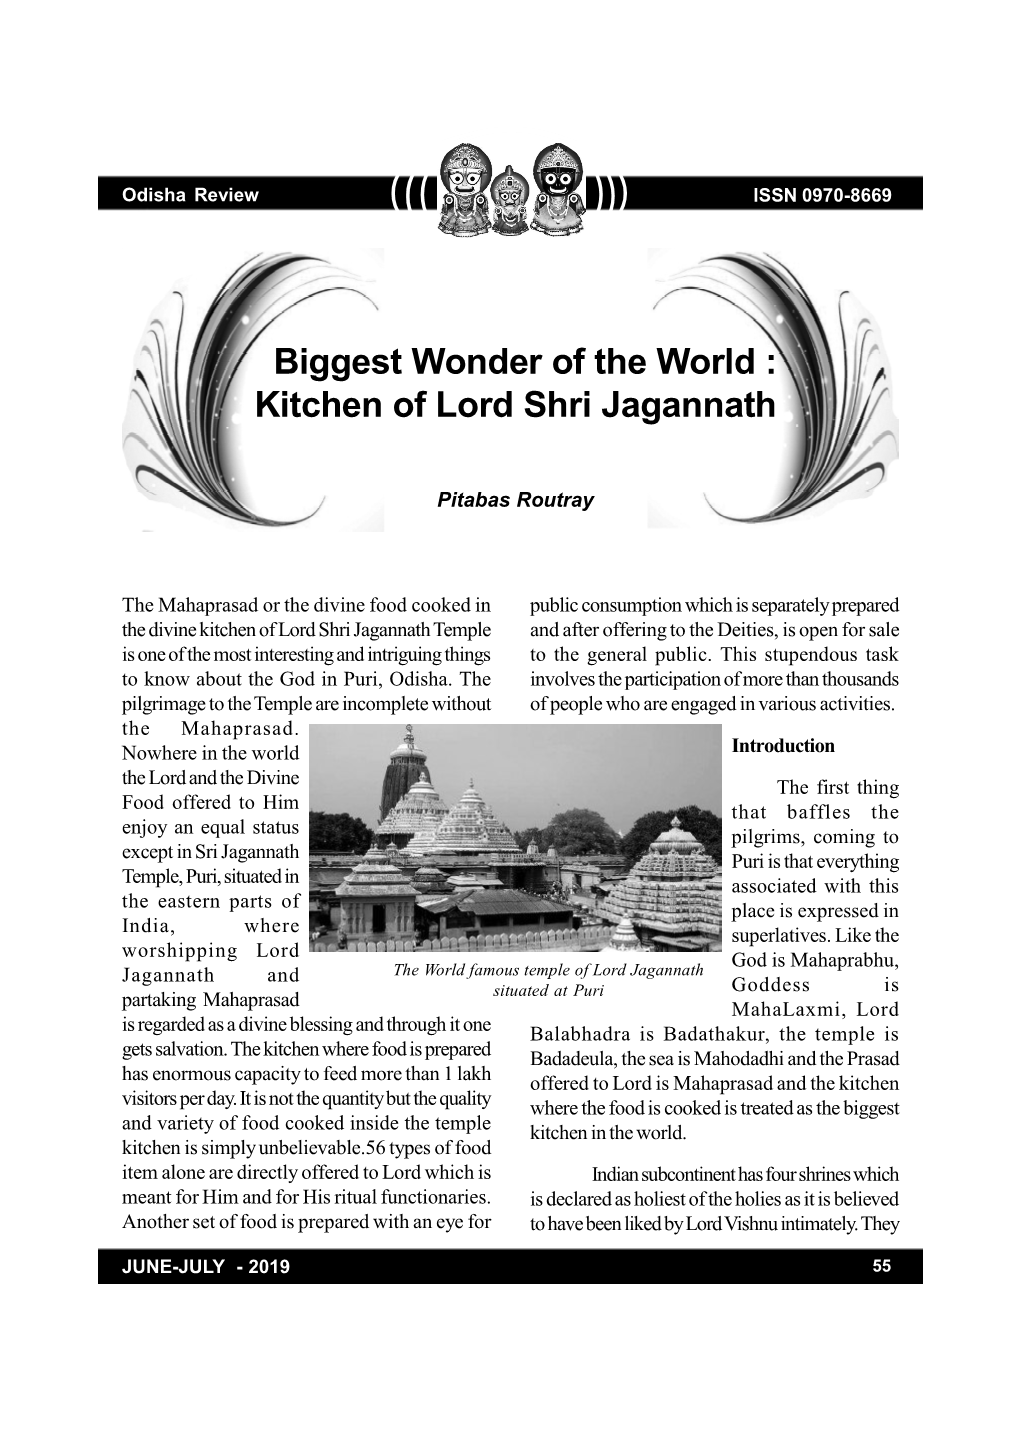 Kitchen of Lord Shri Jagannath